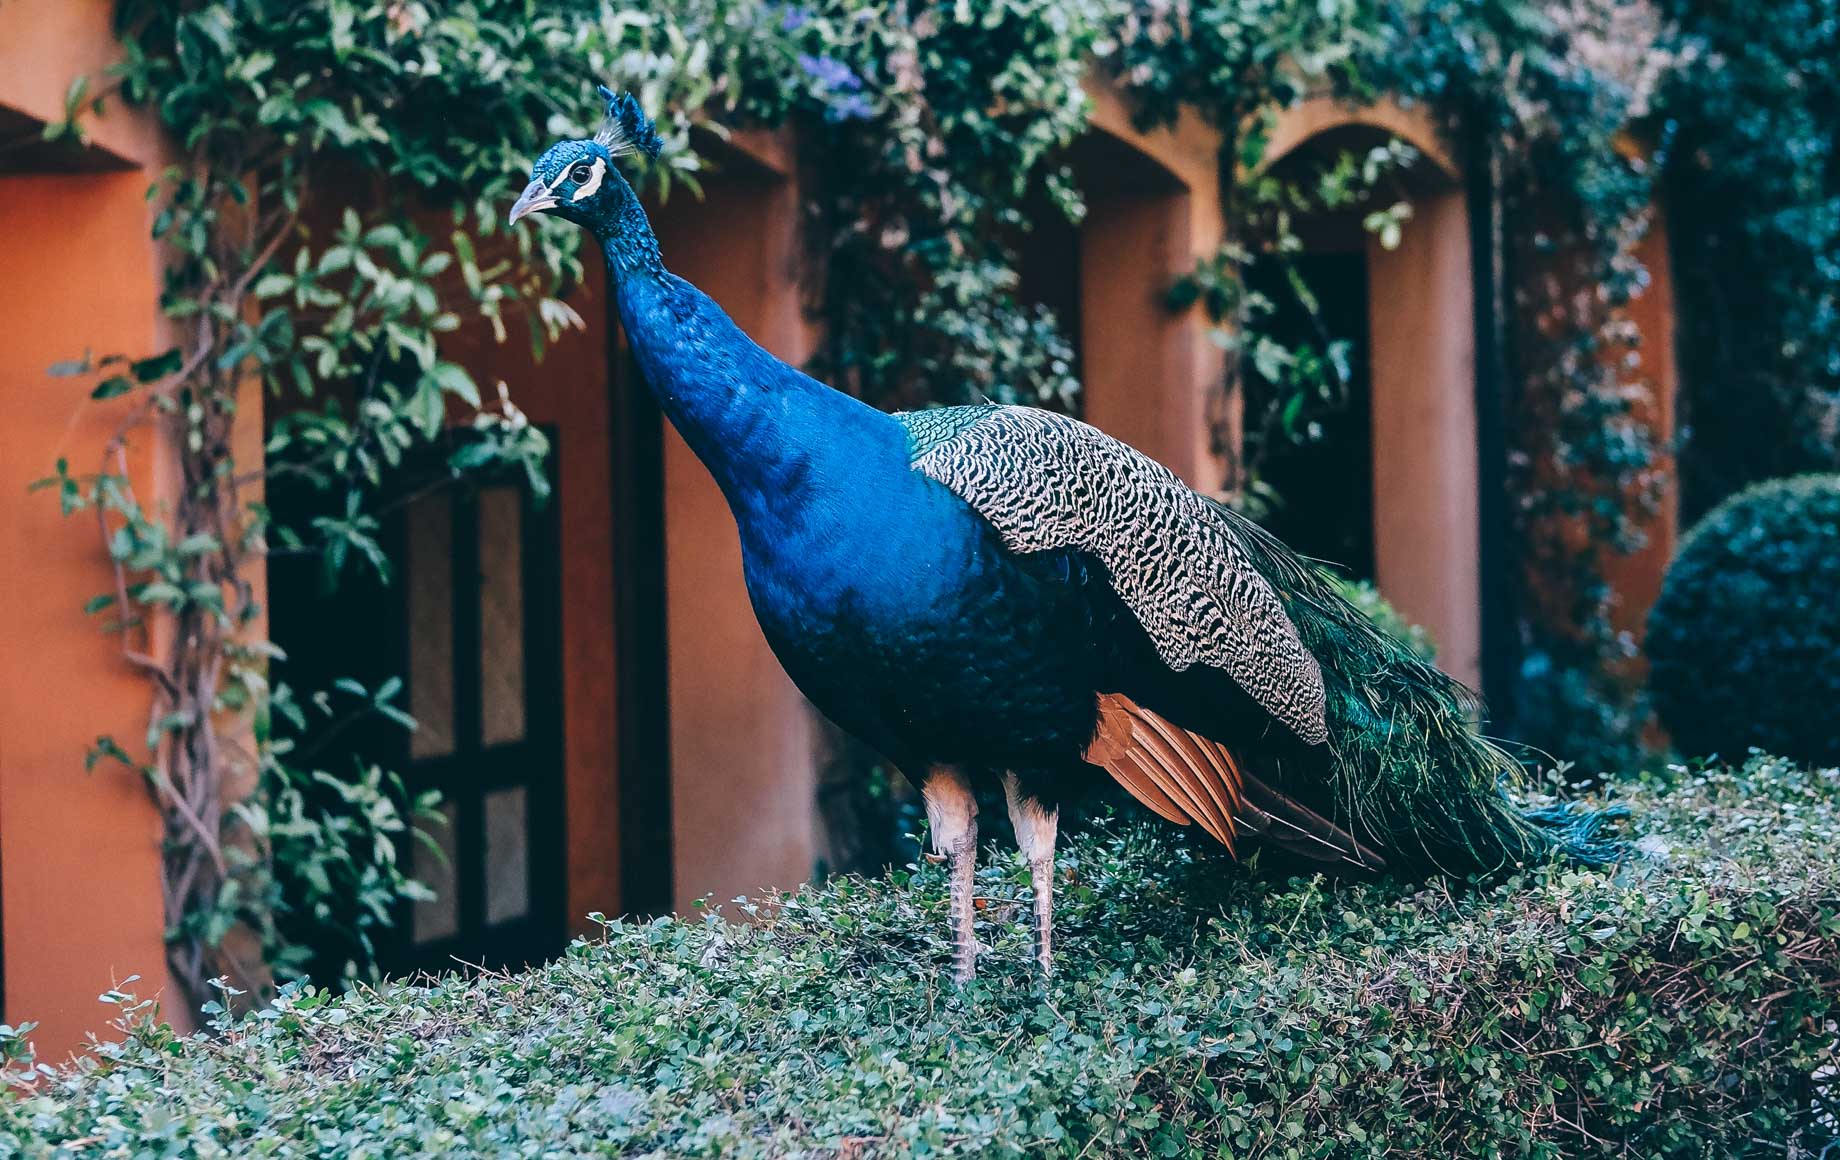 Wild peacock in Cape Winelands